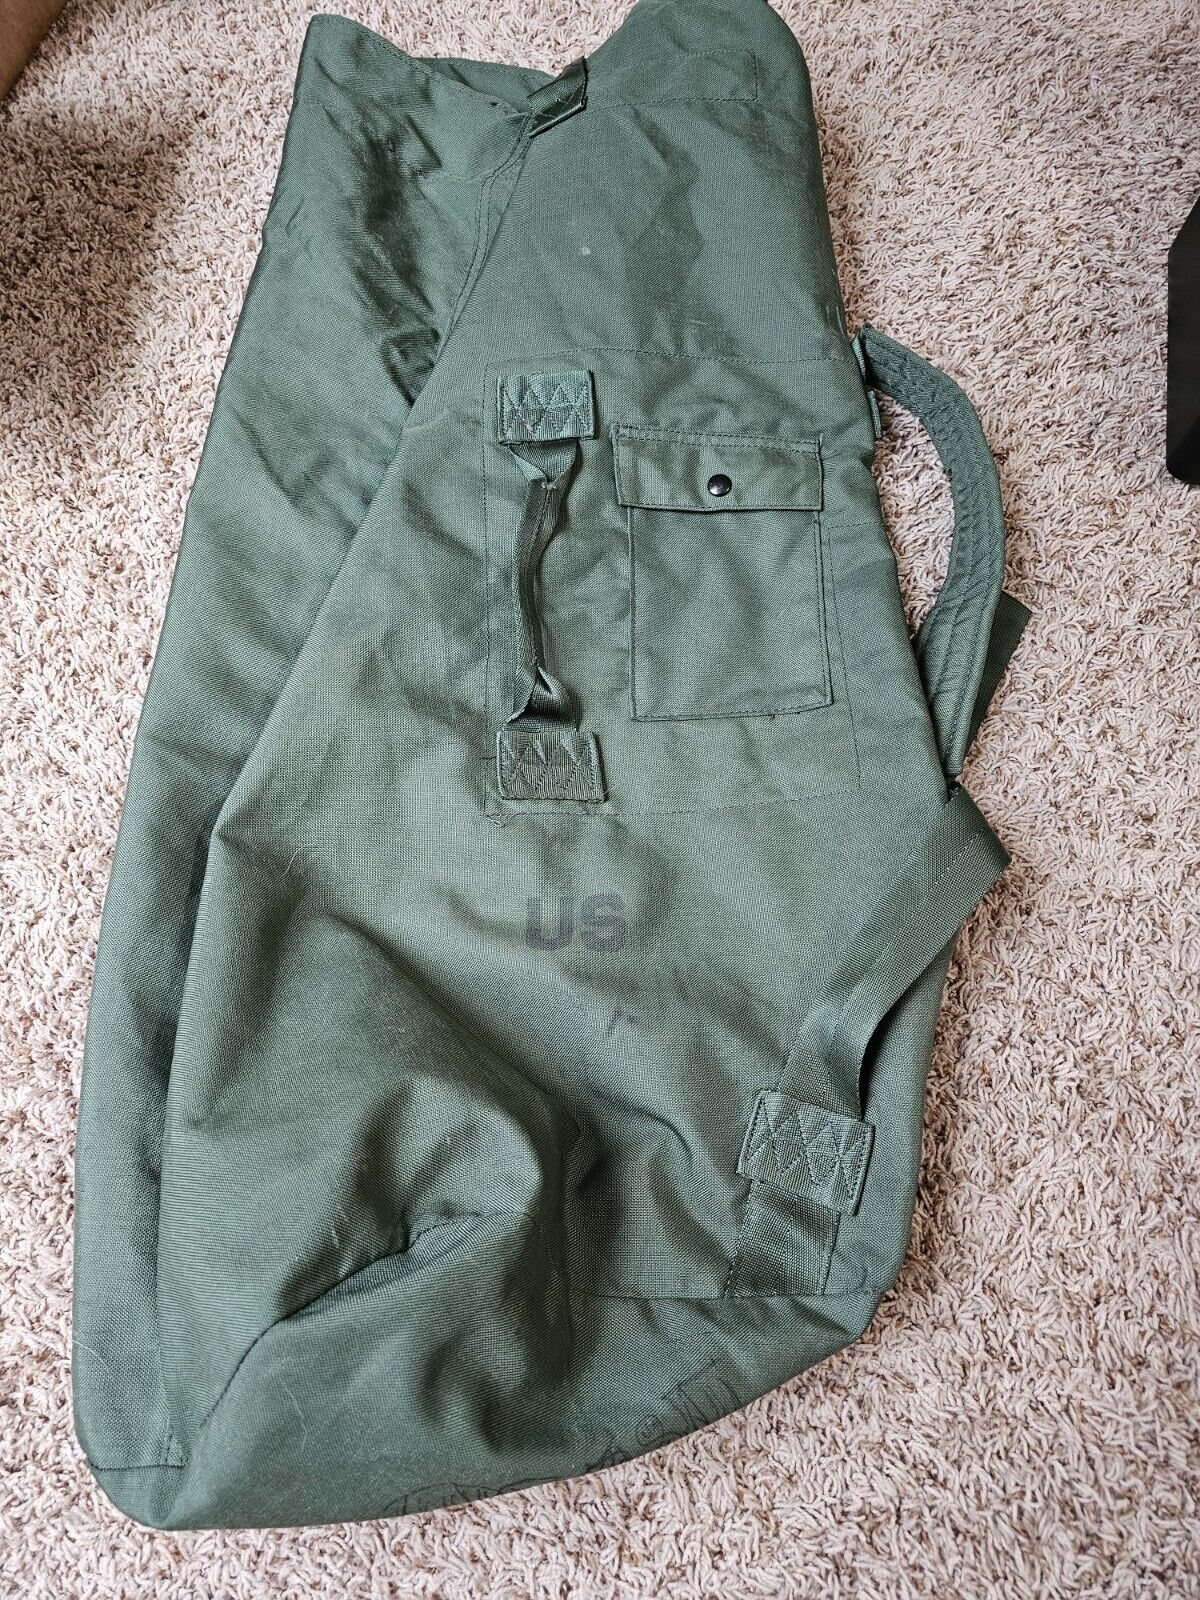 Military Duffle Bag, OD Green Nylon Sea Bag Carry Straps Army Duffel USGI